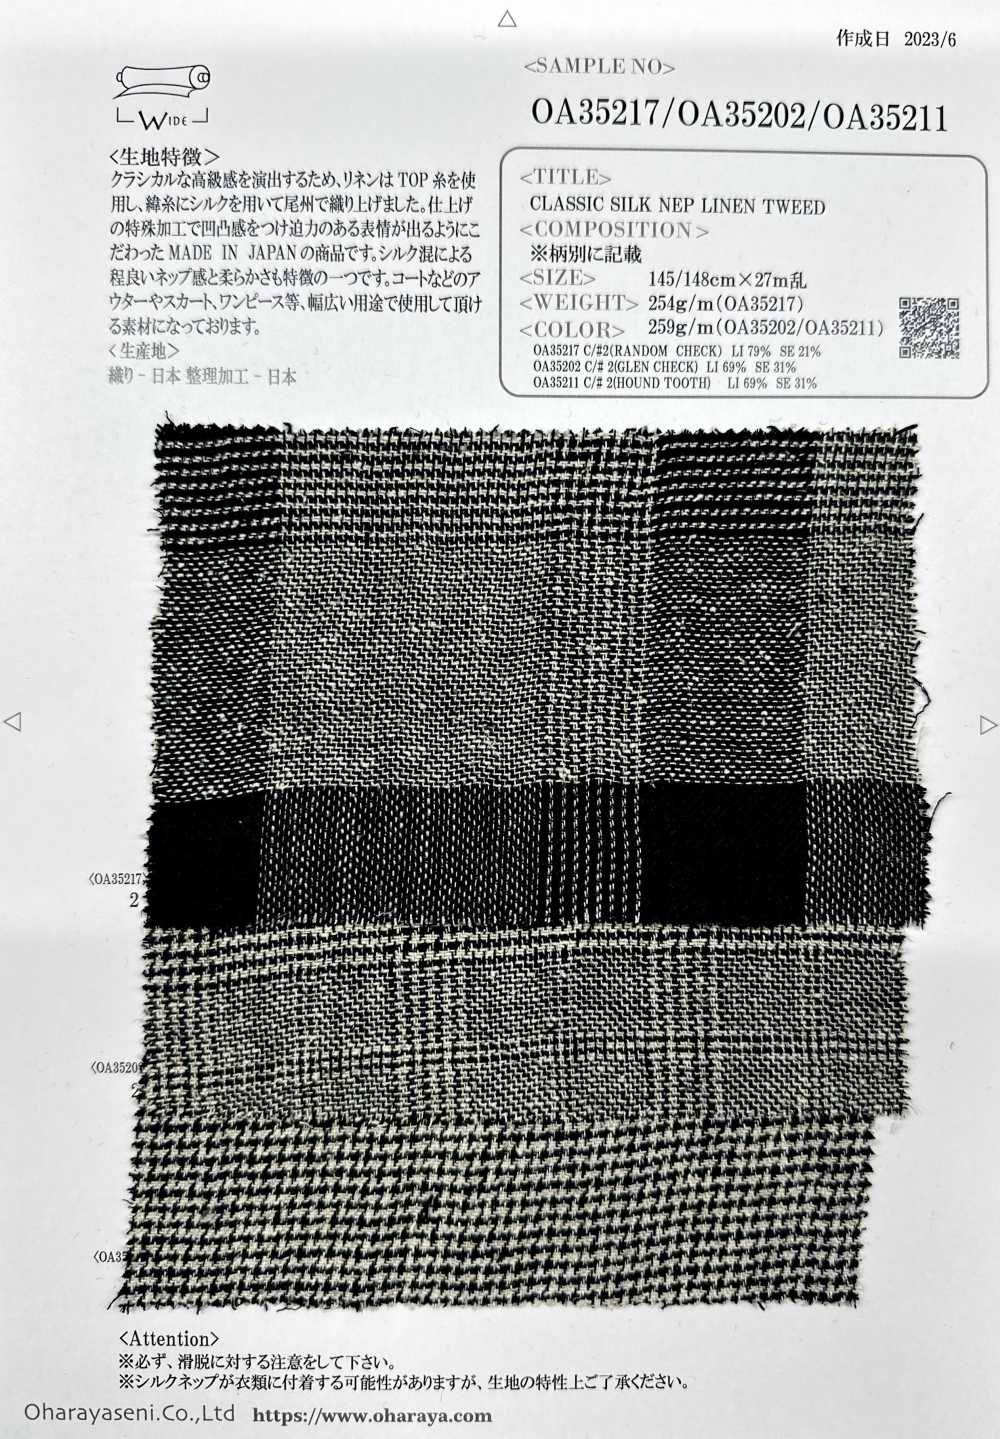 OA35217 LIN CLASSIQUE NEP LIN TWEED[Fabrication De Textile] Oharayaseni